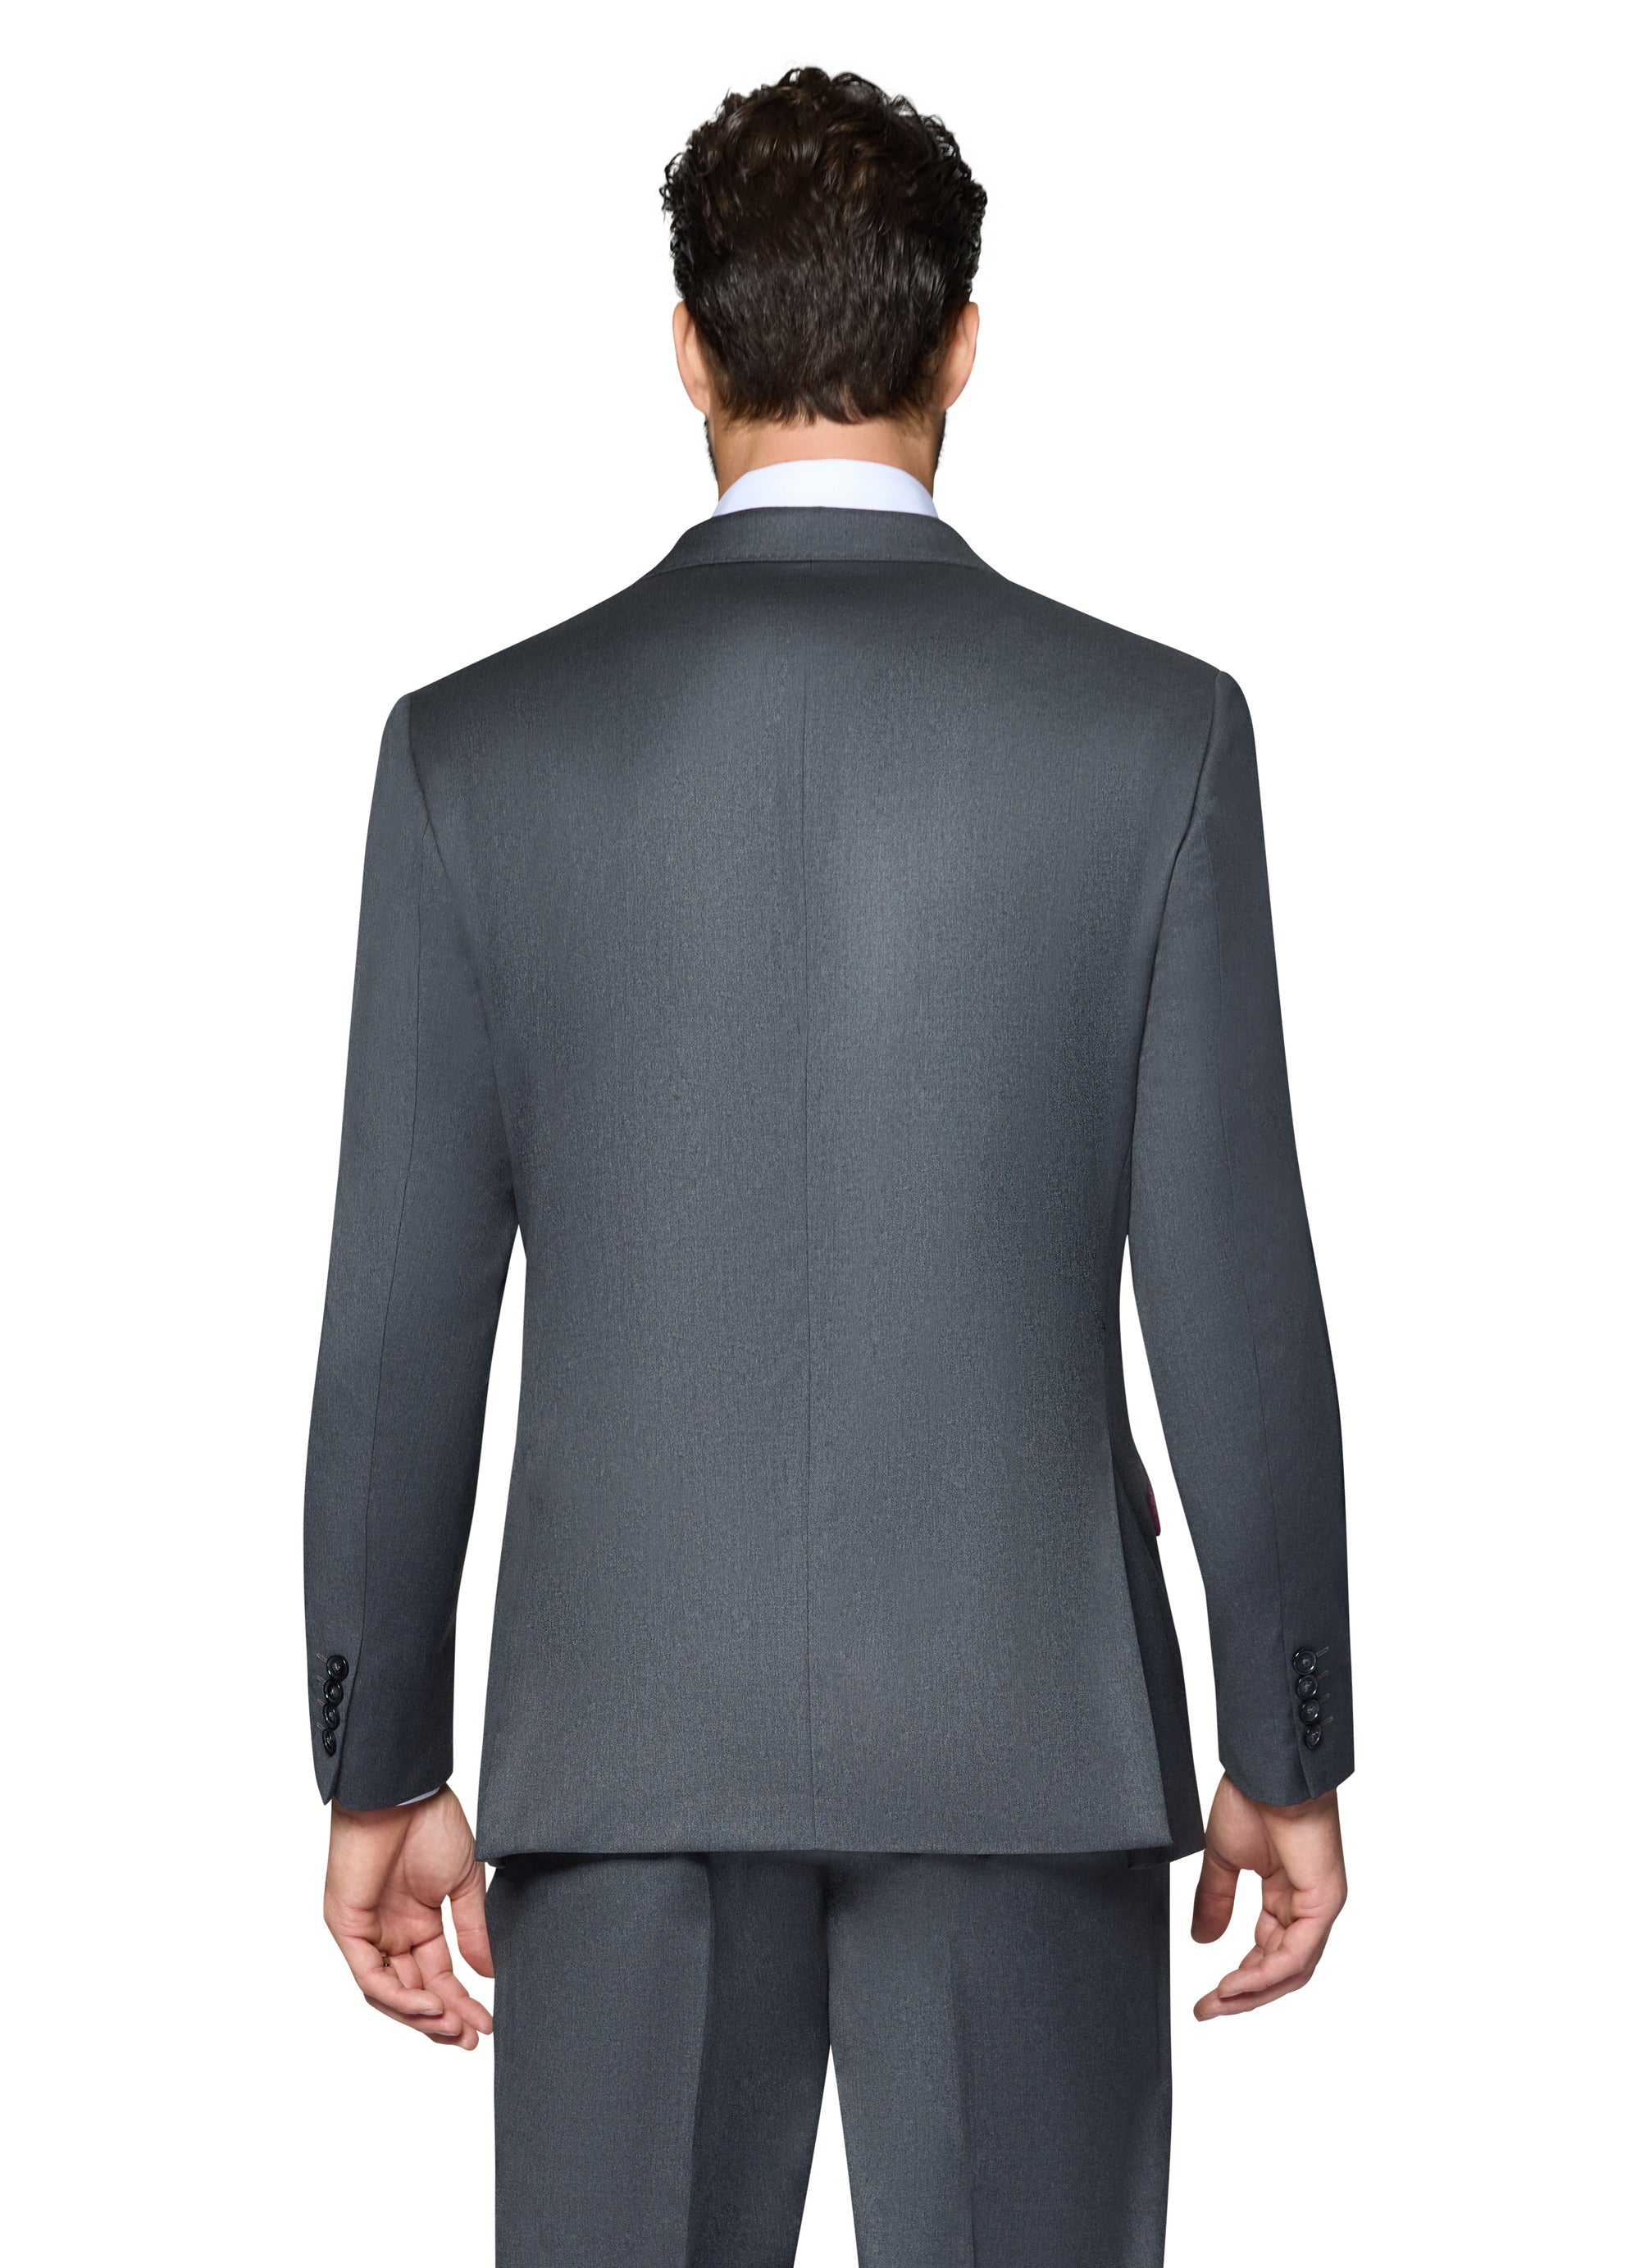 Berragamo - Reda | Modern 2-Piece Notch Solid Charcoal Suit